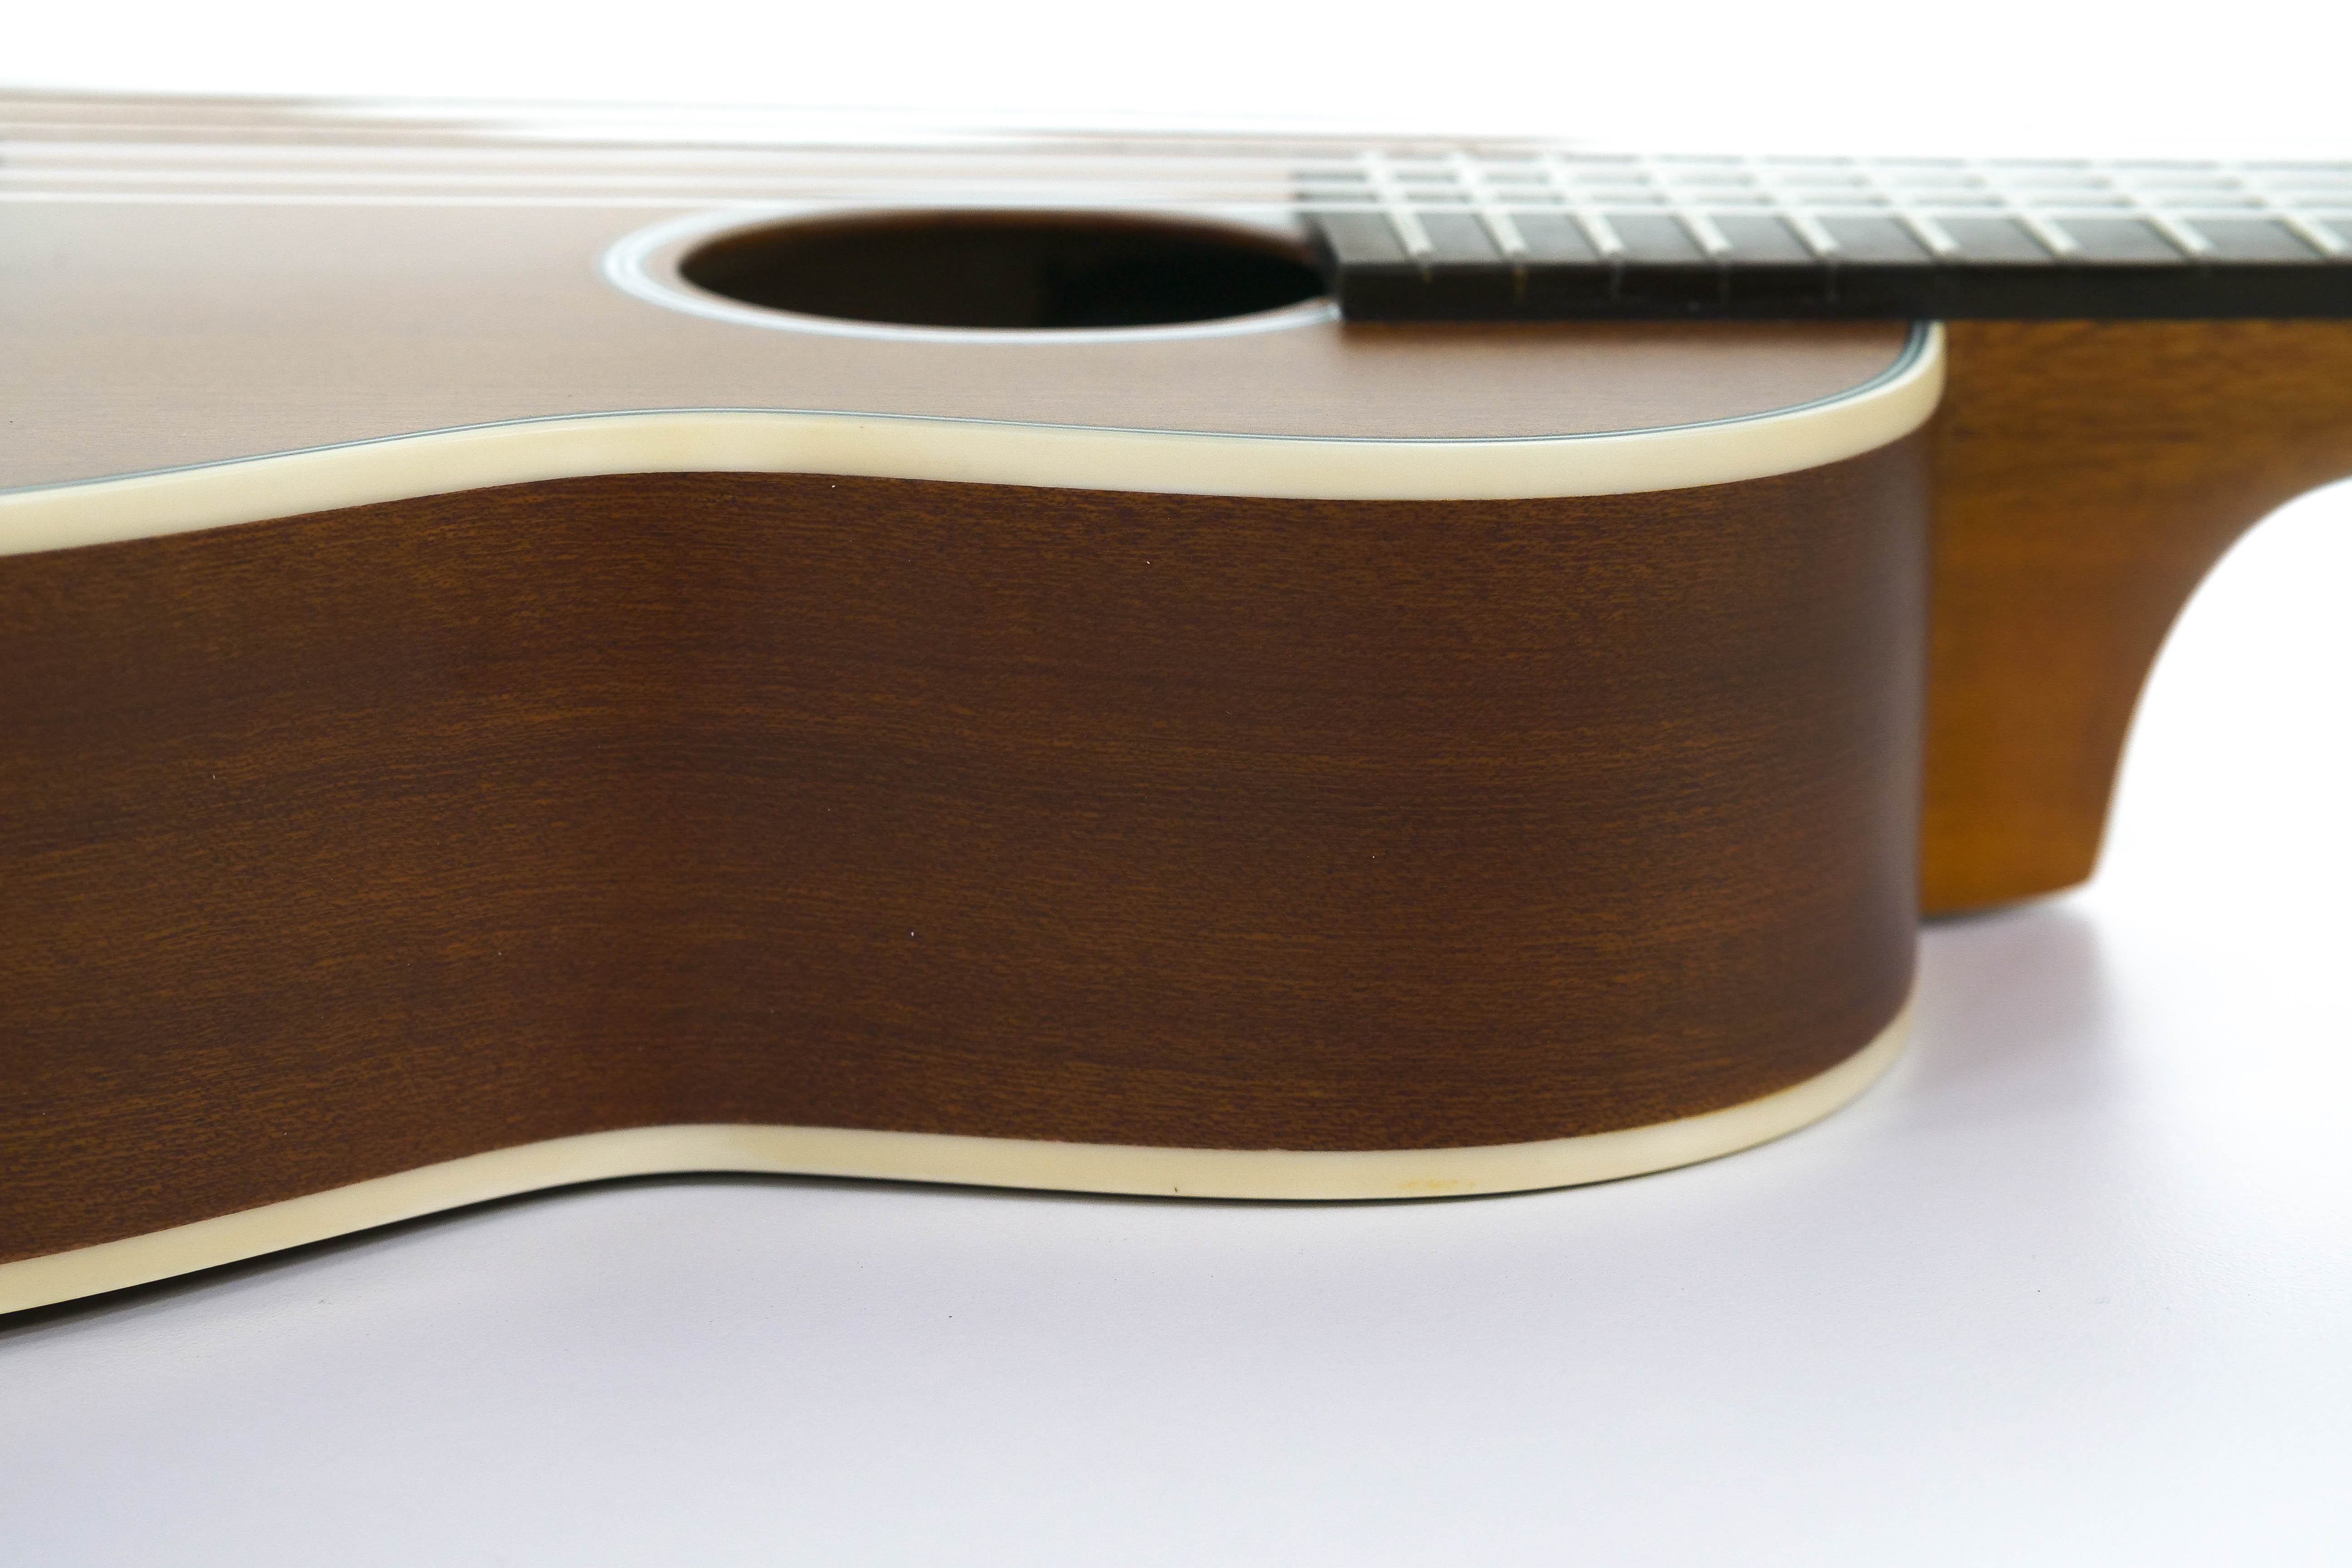 Ohana TKGL-20E Solid Mahogany Top Guitarlele with Pickup - A To A Tuning